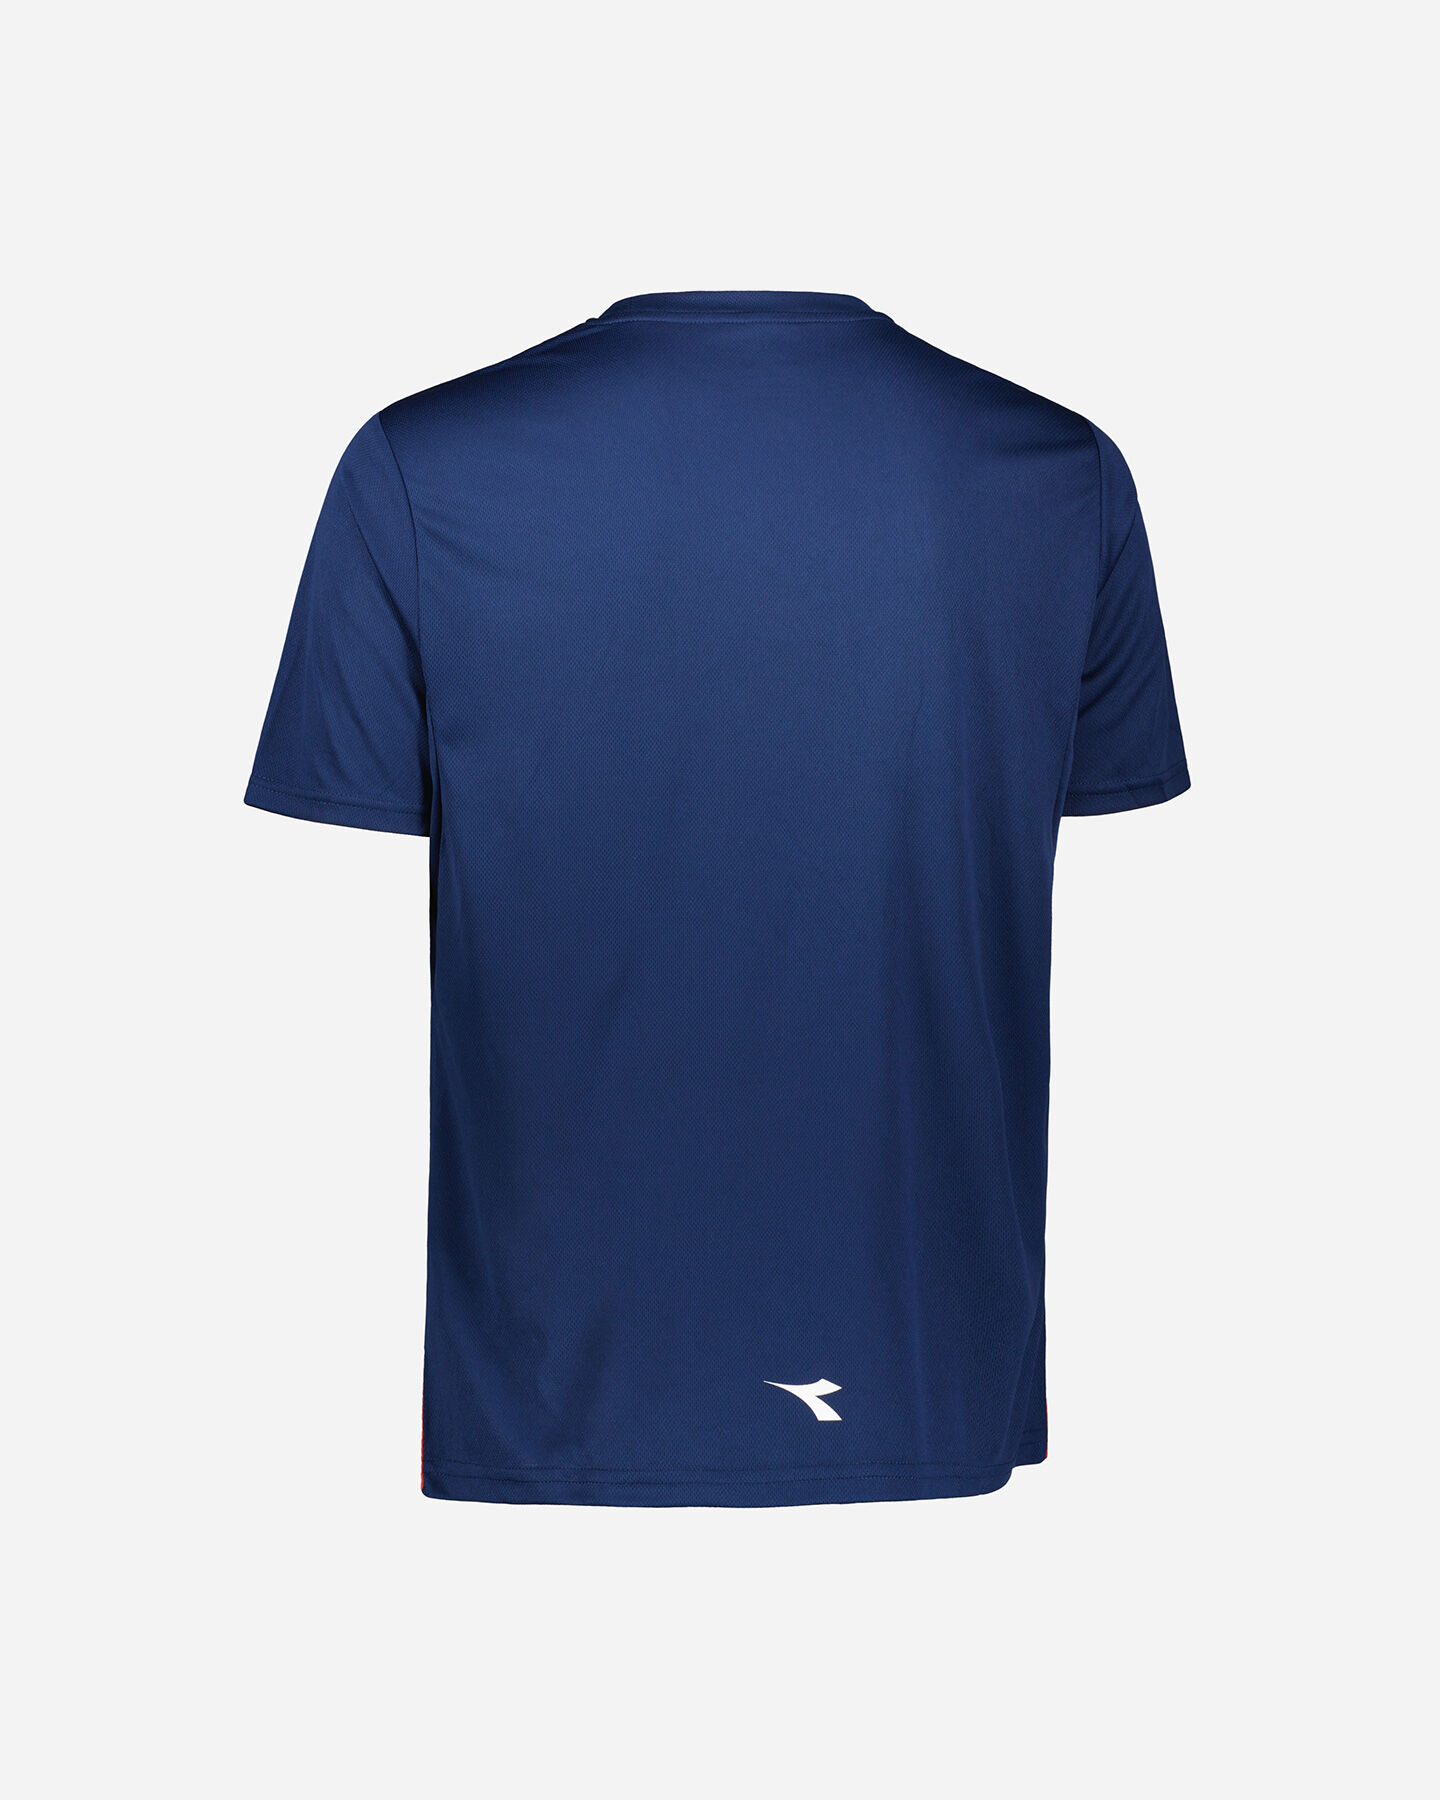  T-Shirt tennis DIADORA CORE M S5400755|60024|S scatto 1